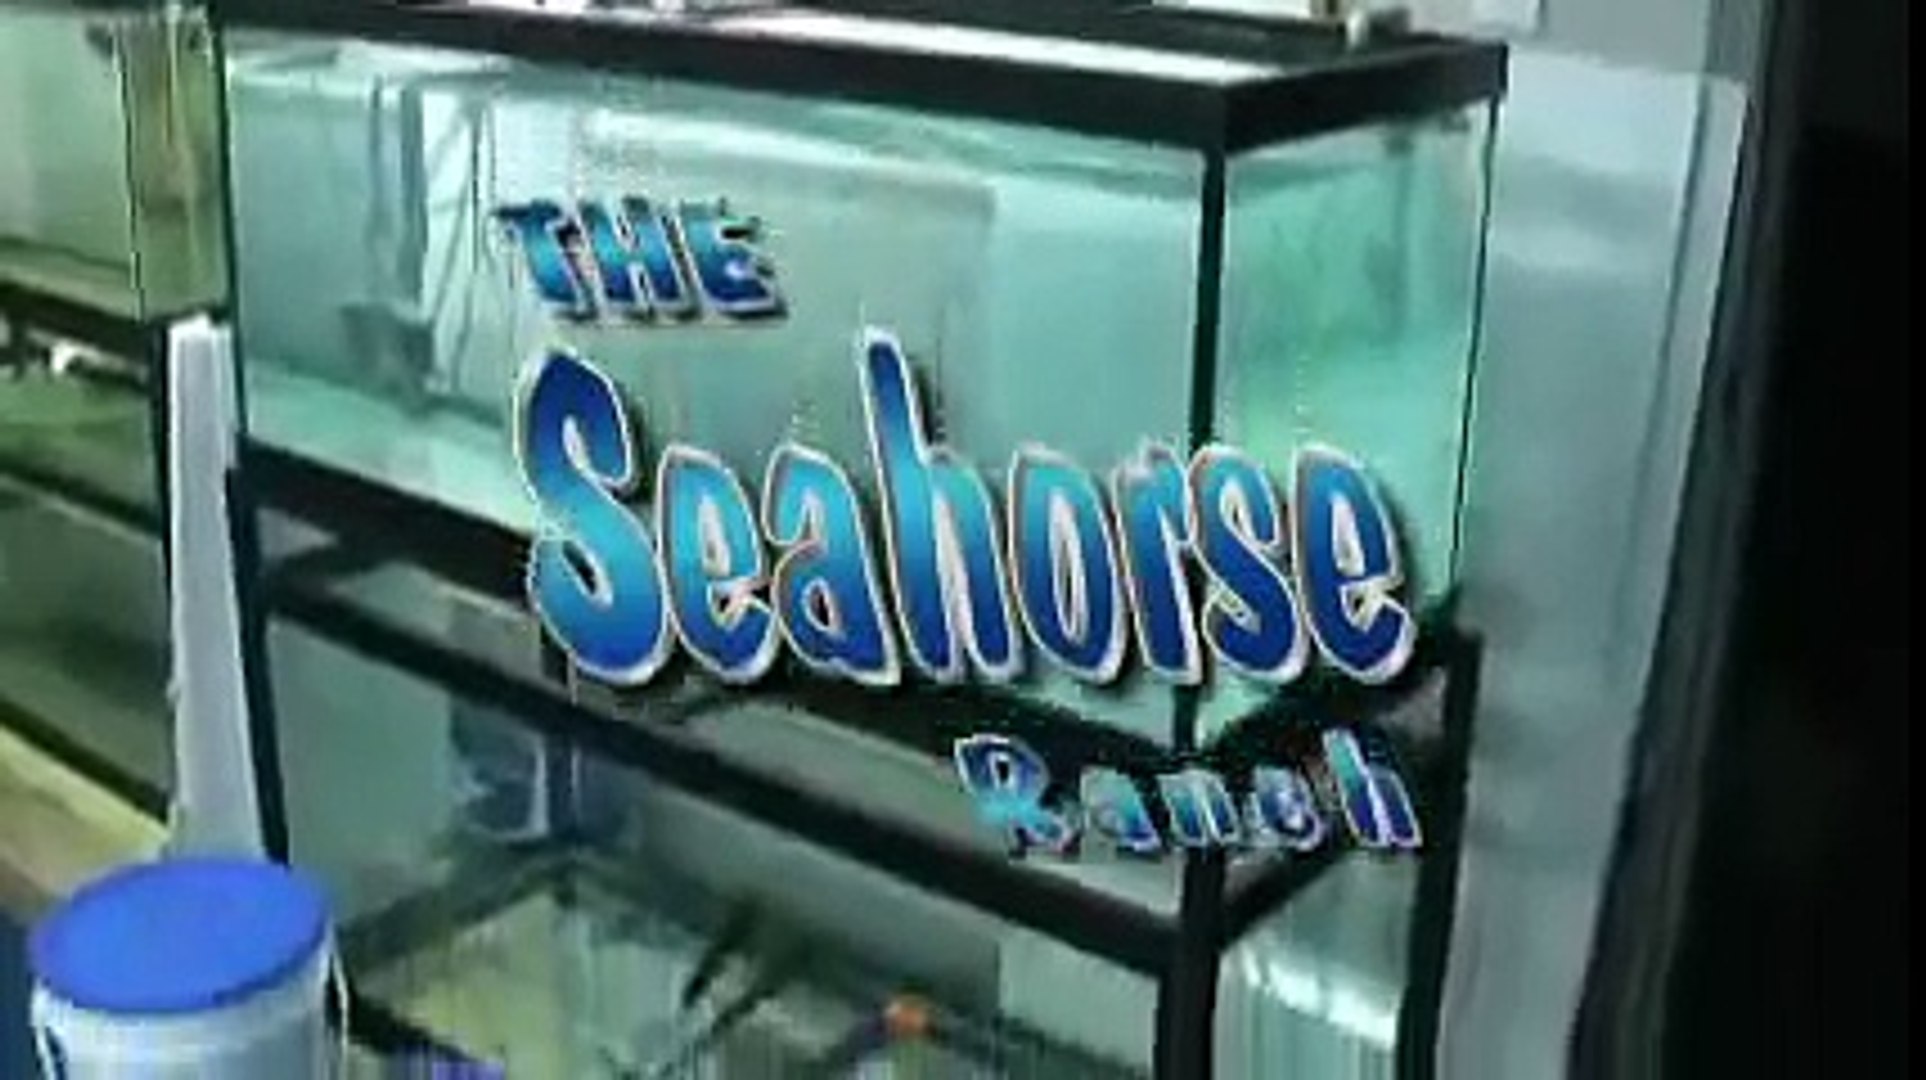 The Seahorse Ranch